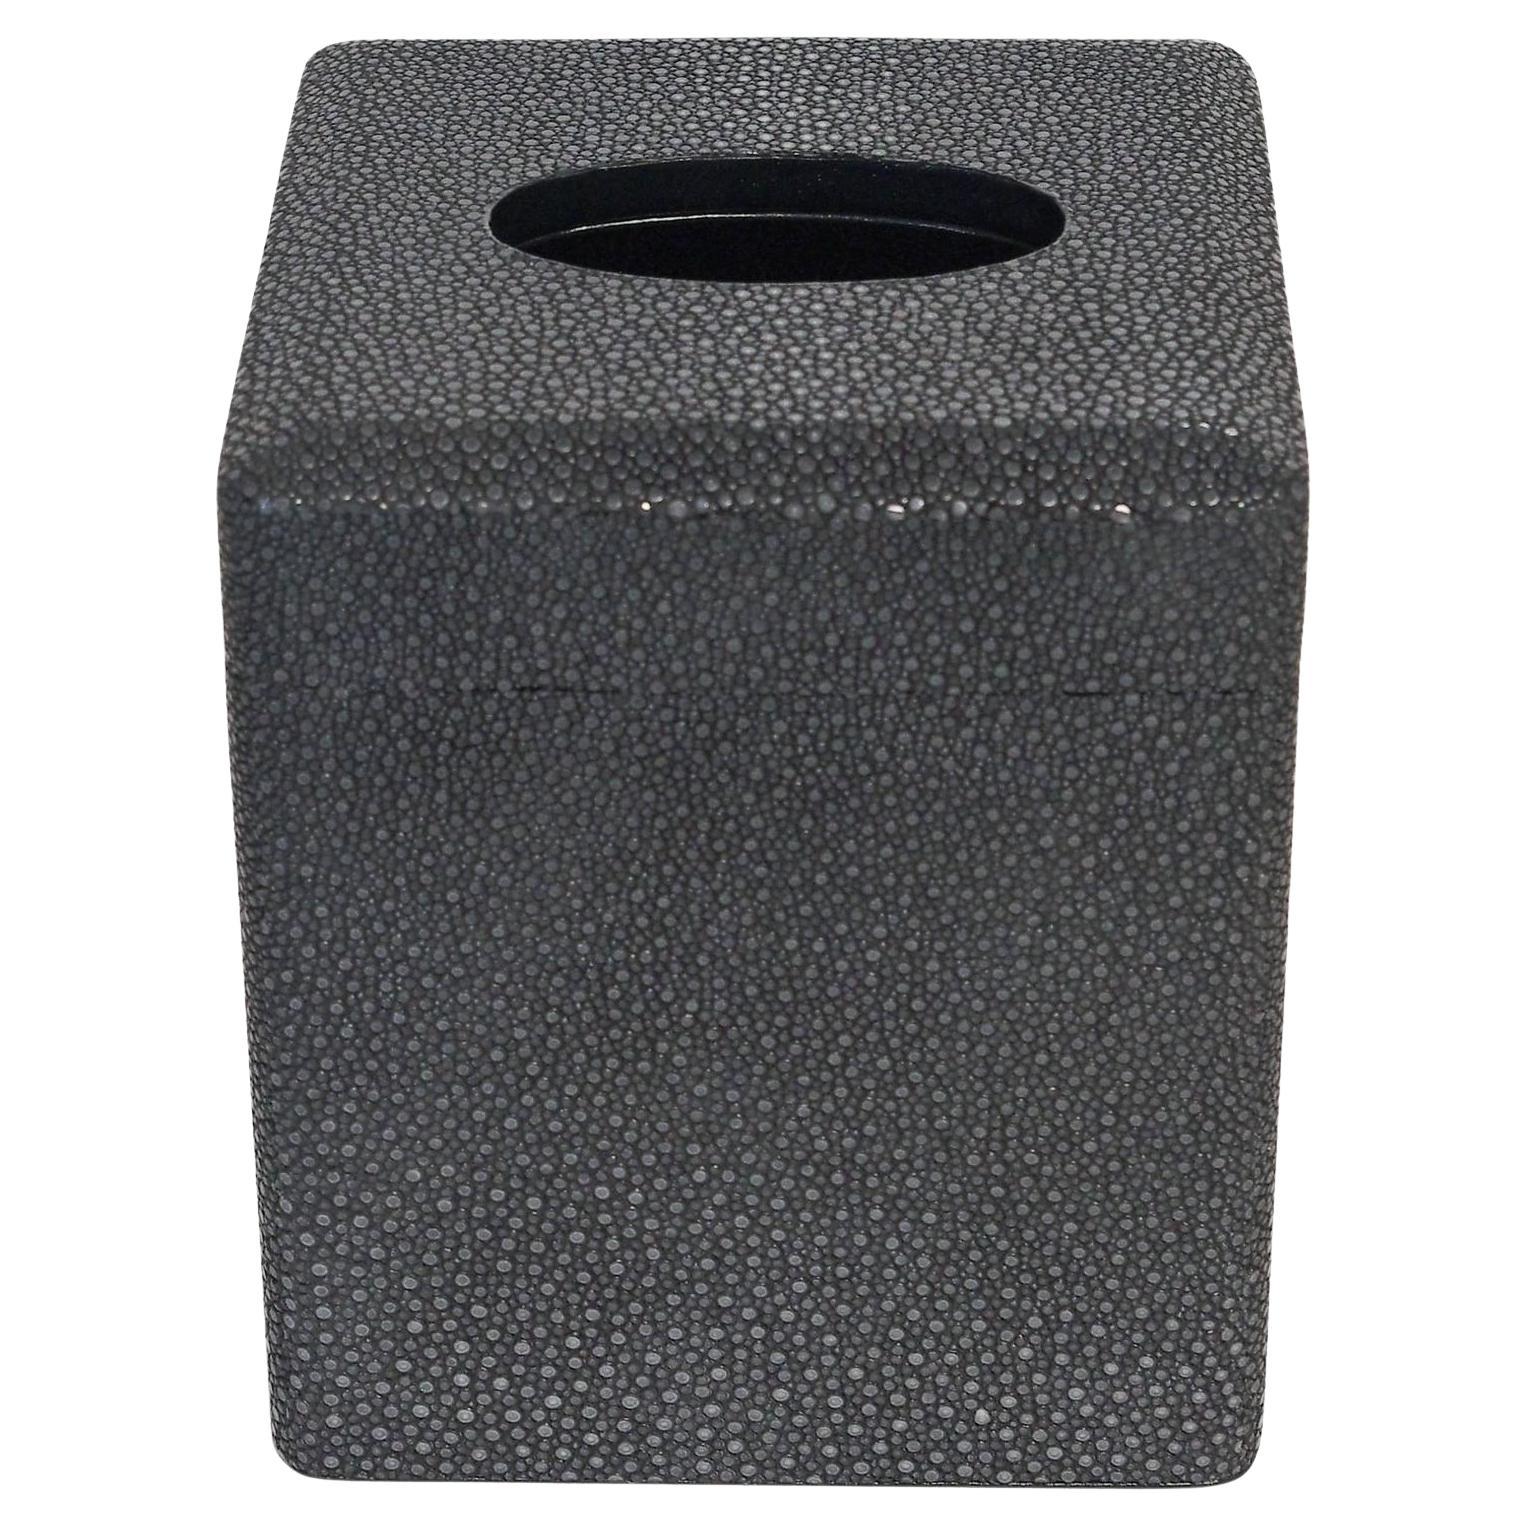 Black Shagreen Tissue Box